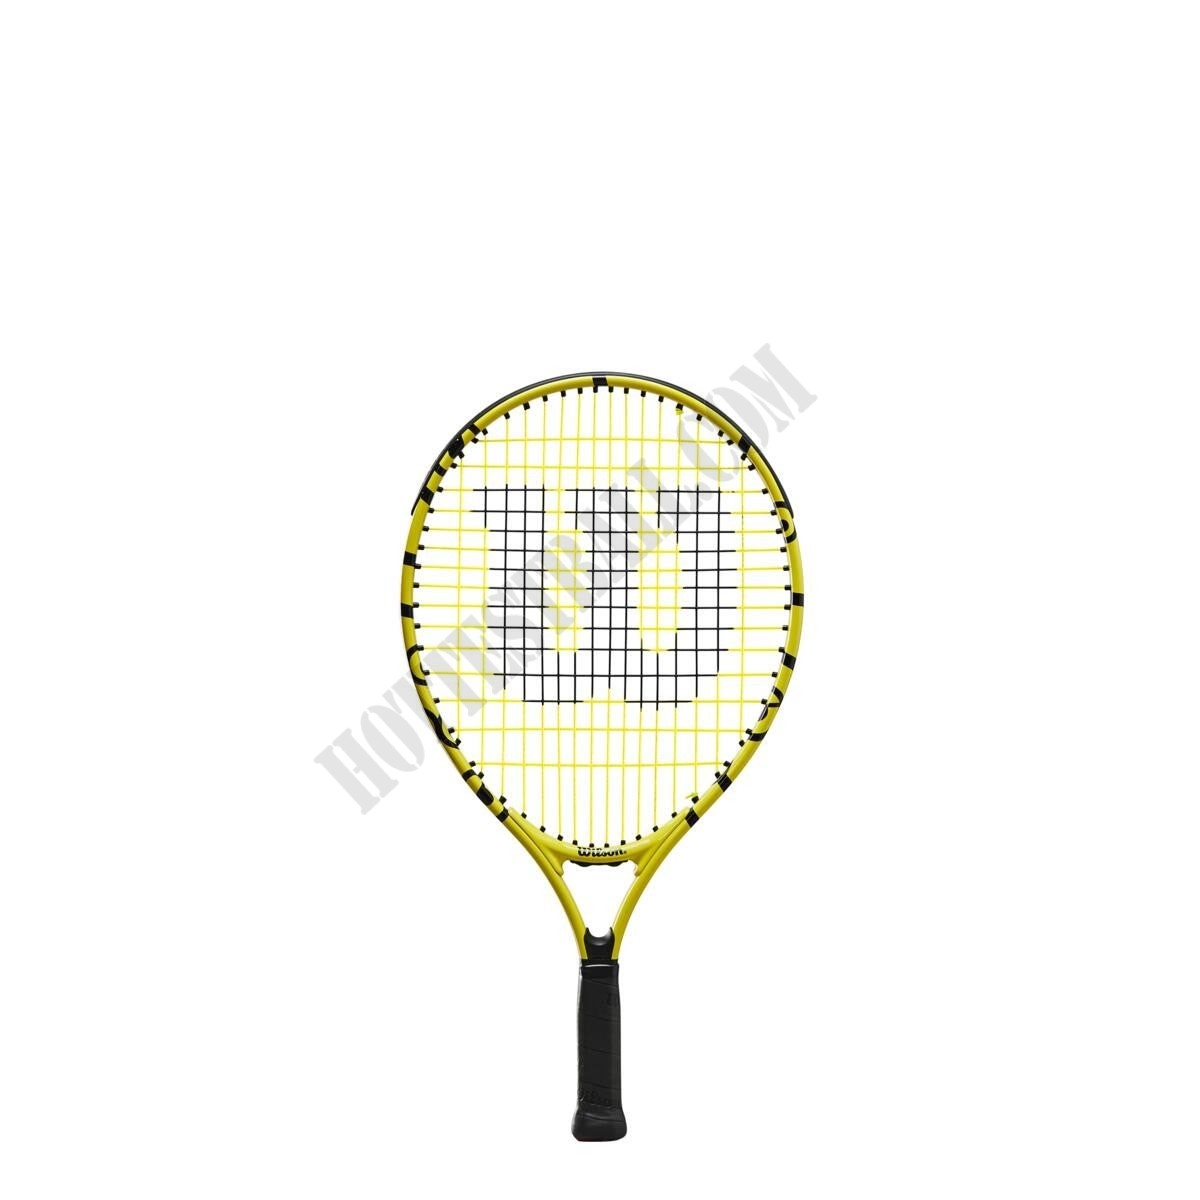 Minions 19 Tennis Racket - Wilson Discount Store - Minions 19 Tennis Racket - Wilson Discount Store